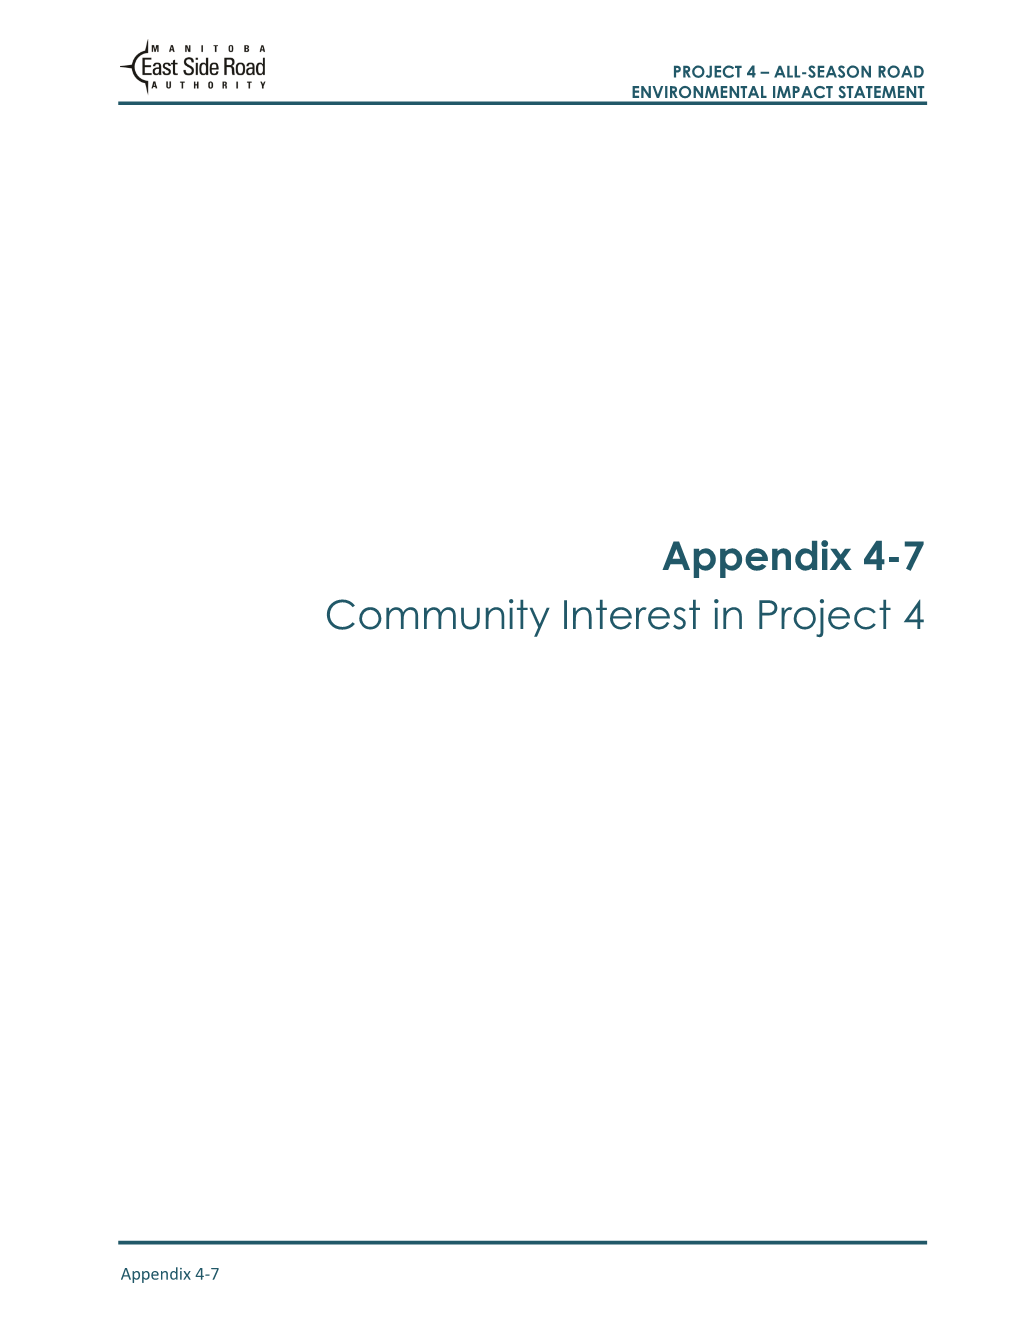 Appendix 4-7 Community Interest in Project 4